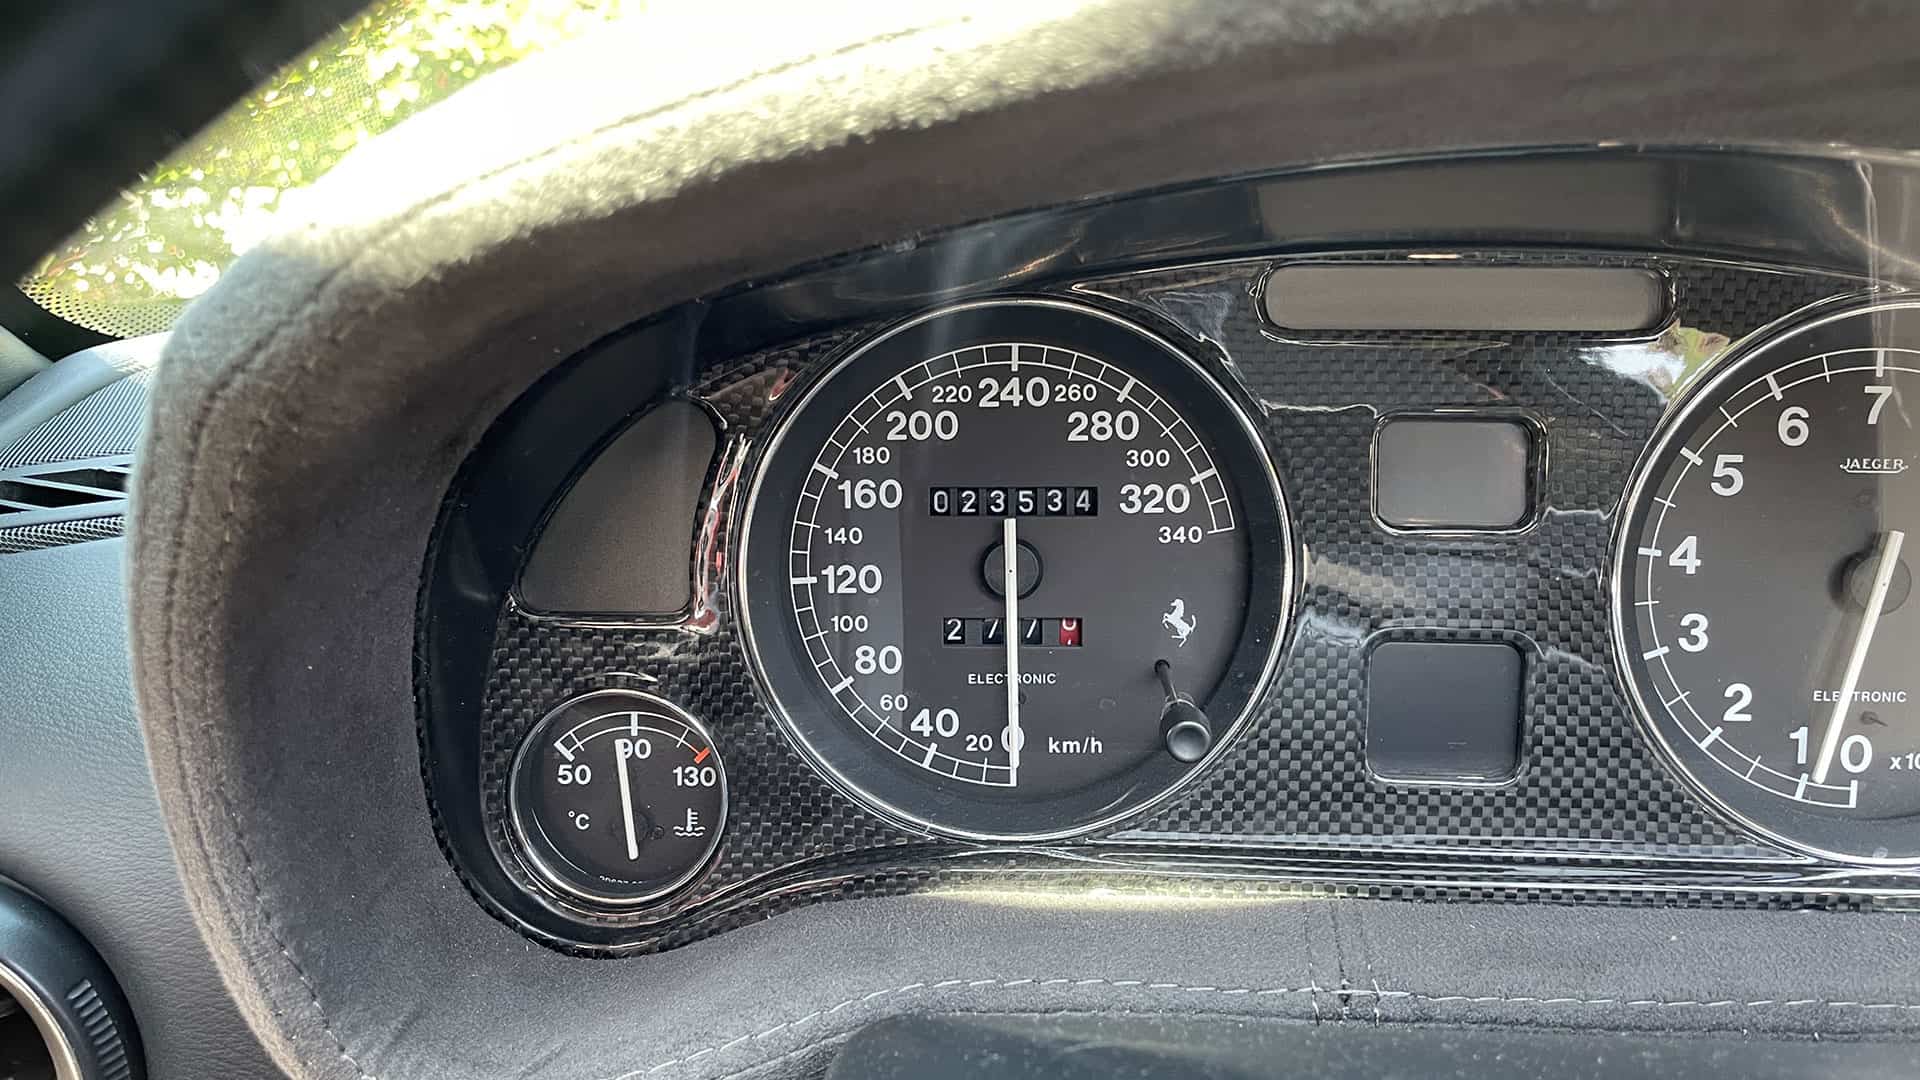 Speedometer of the Ferrari 550 Barchetta